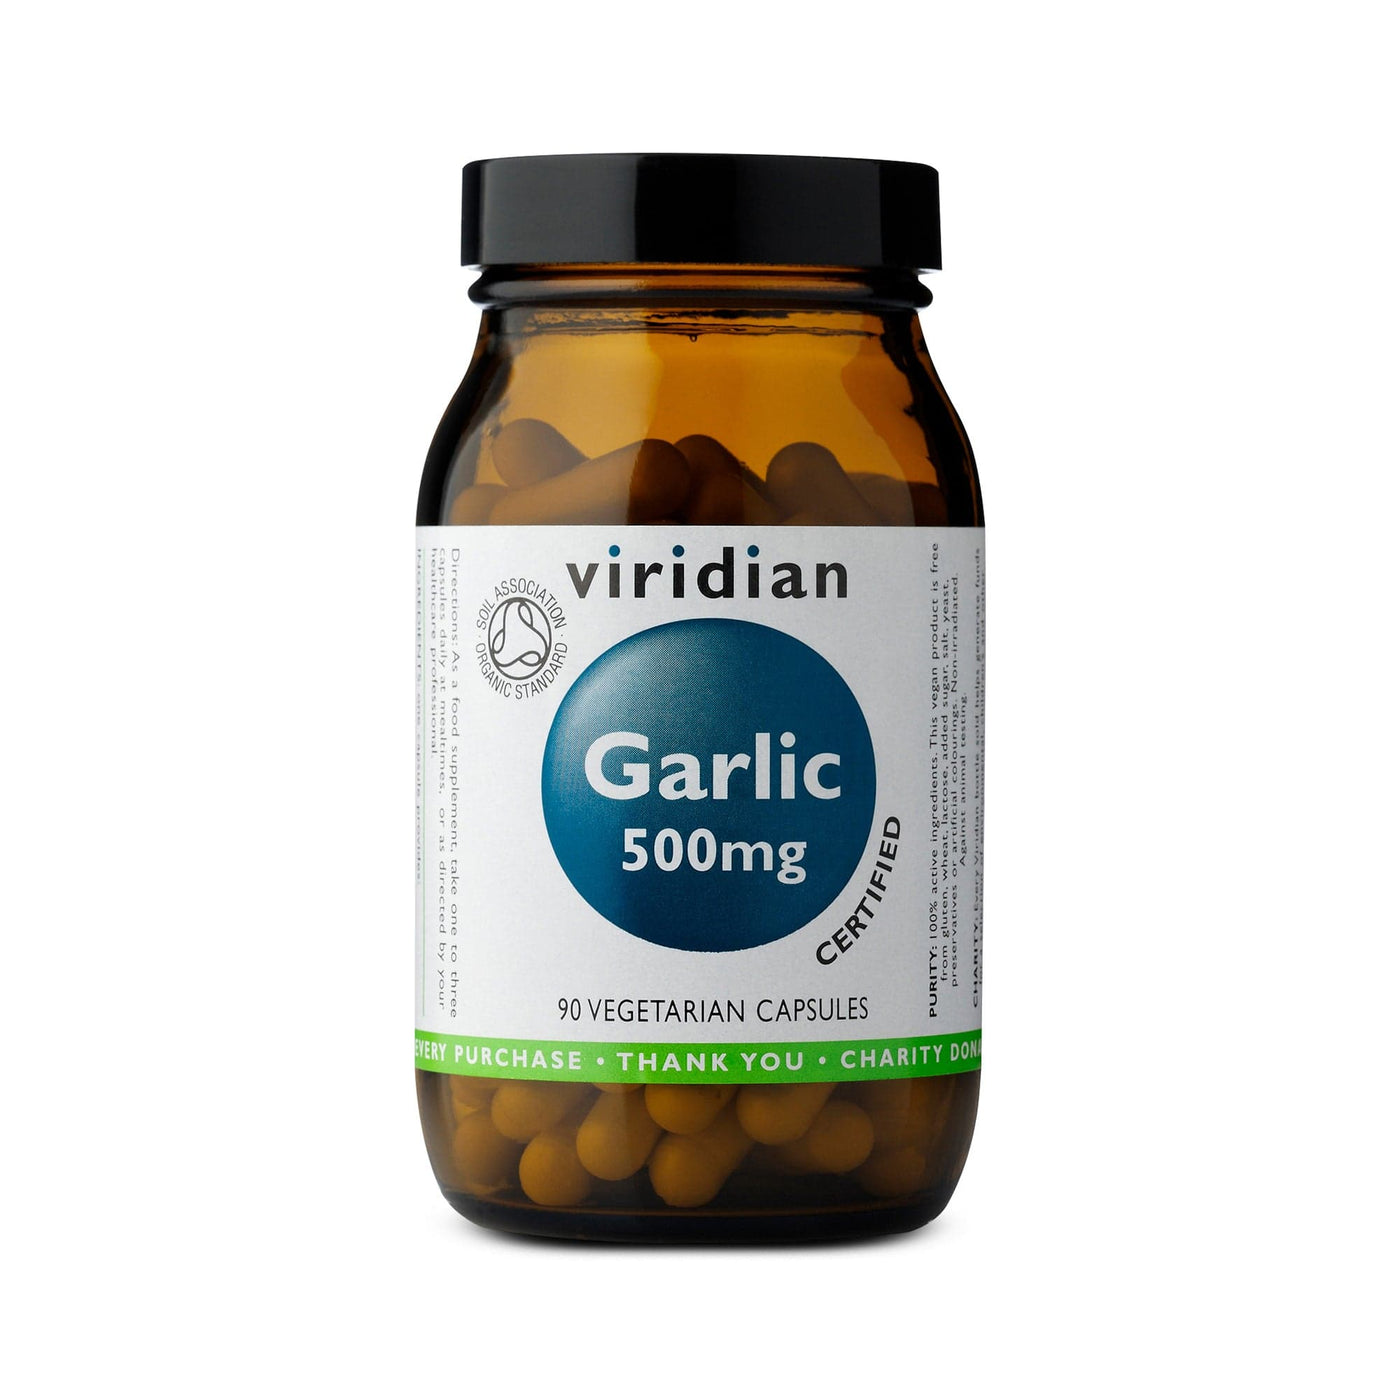 Neal's Yard Remedies Viridian Garlic 500mg - 90 Capsules